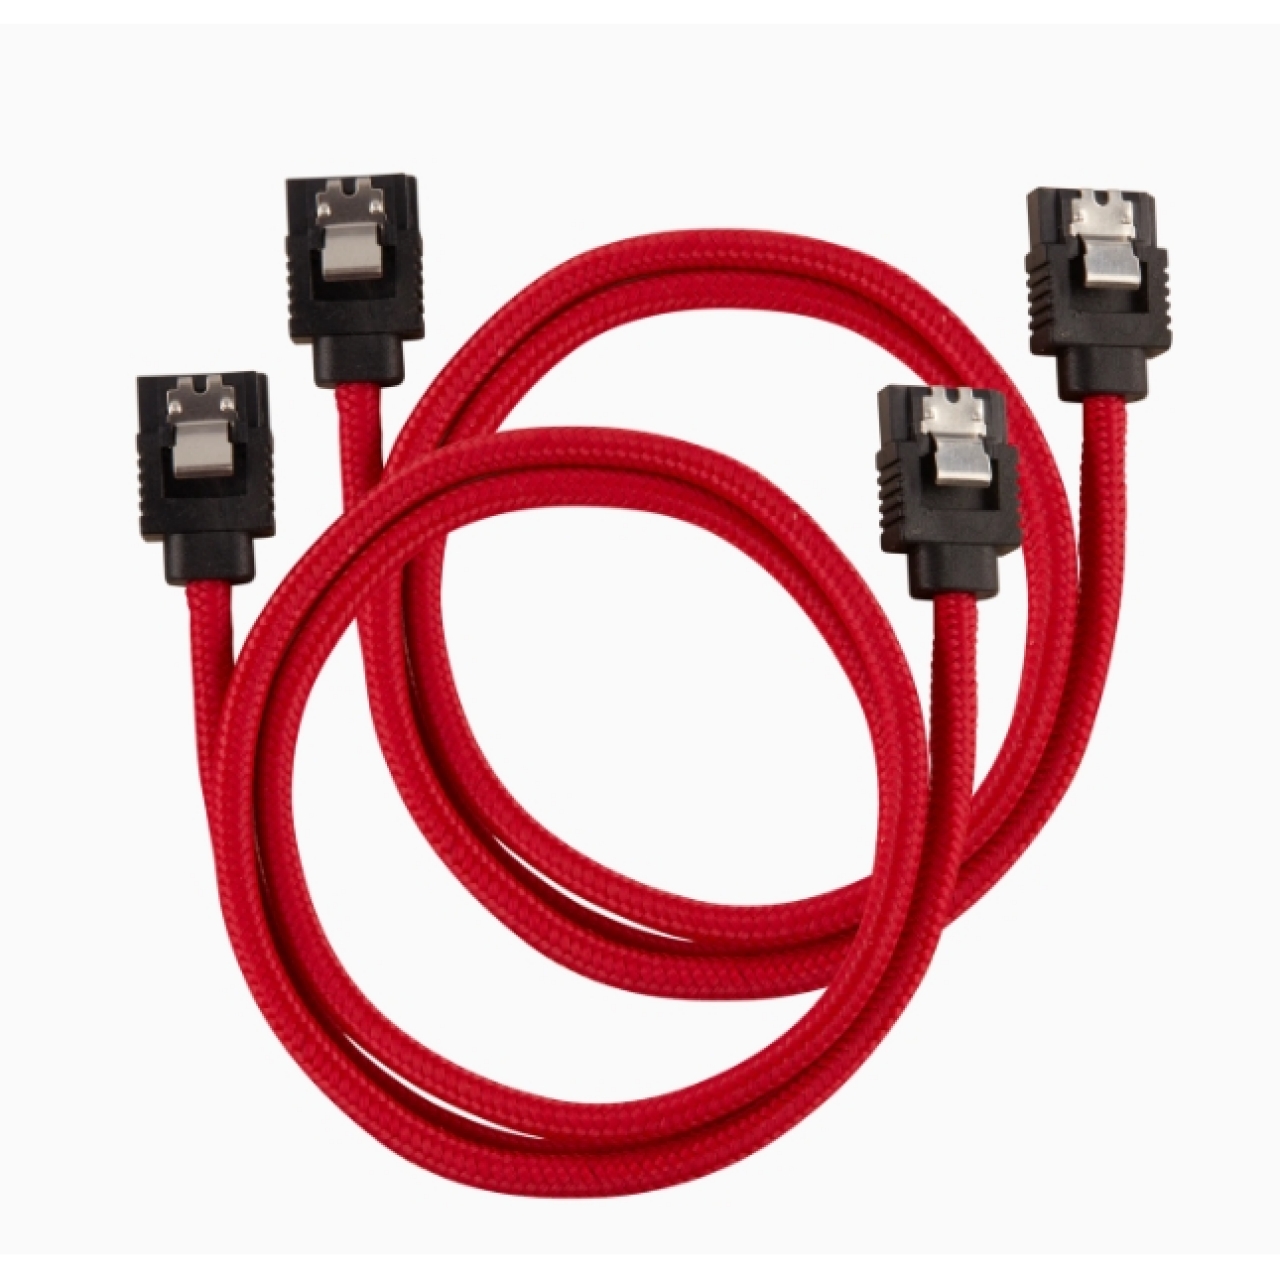 CORSAIR CC-8900254 Premium Sleeved SATA 6Gbps 60cm Cable — Red